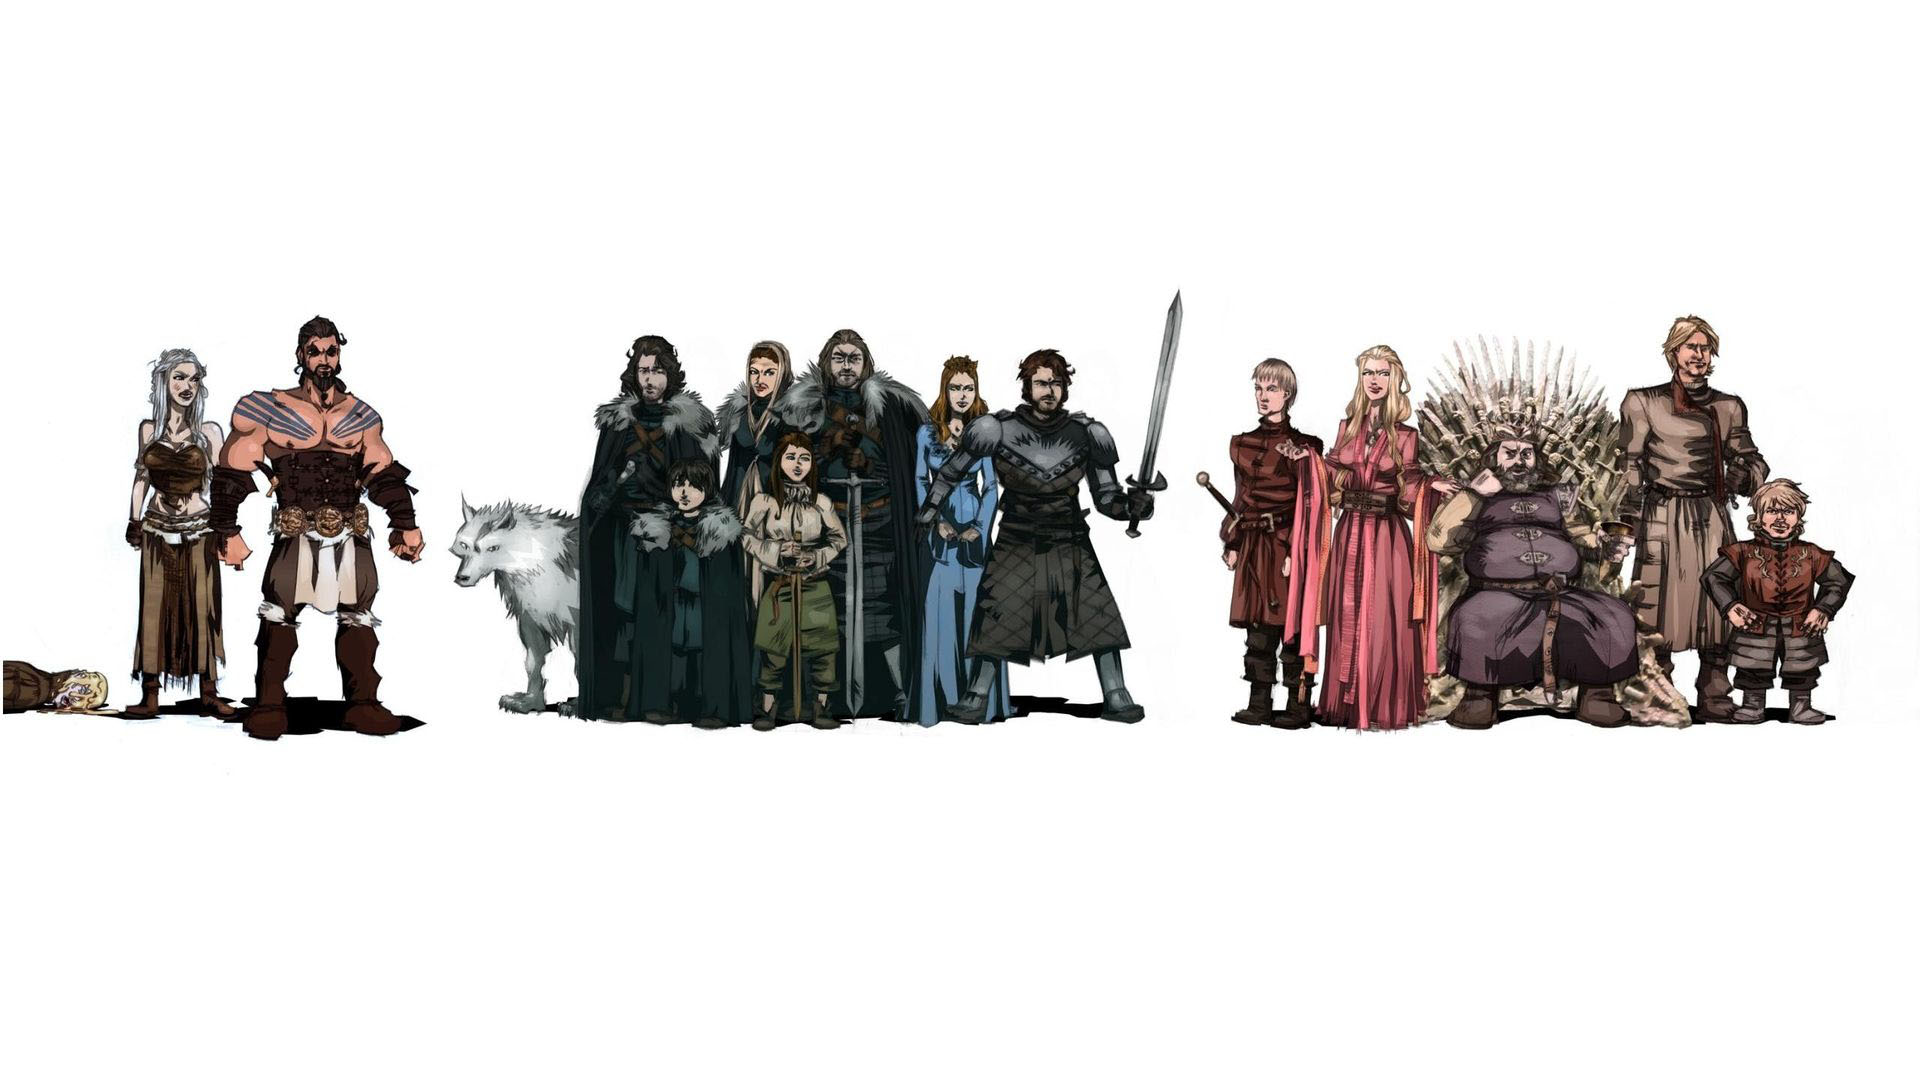 Game of Thrones Artwork Characters Wallpaper   DreamLoveWallpapers